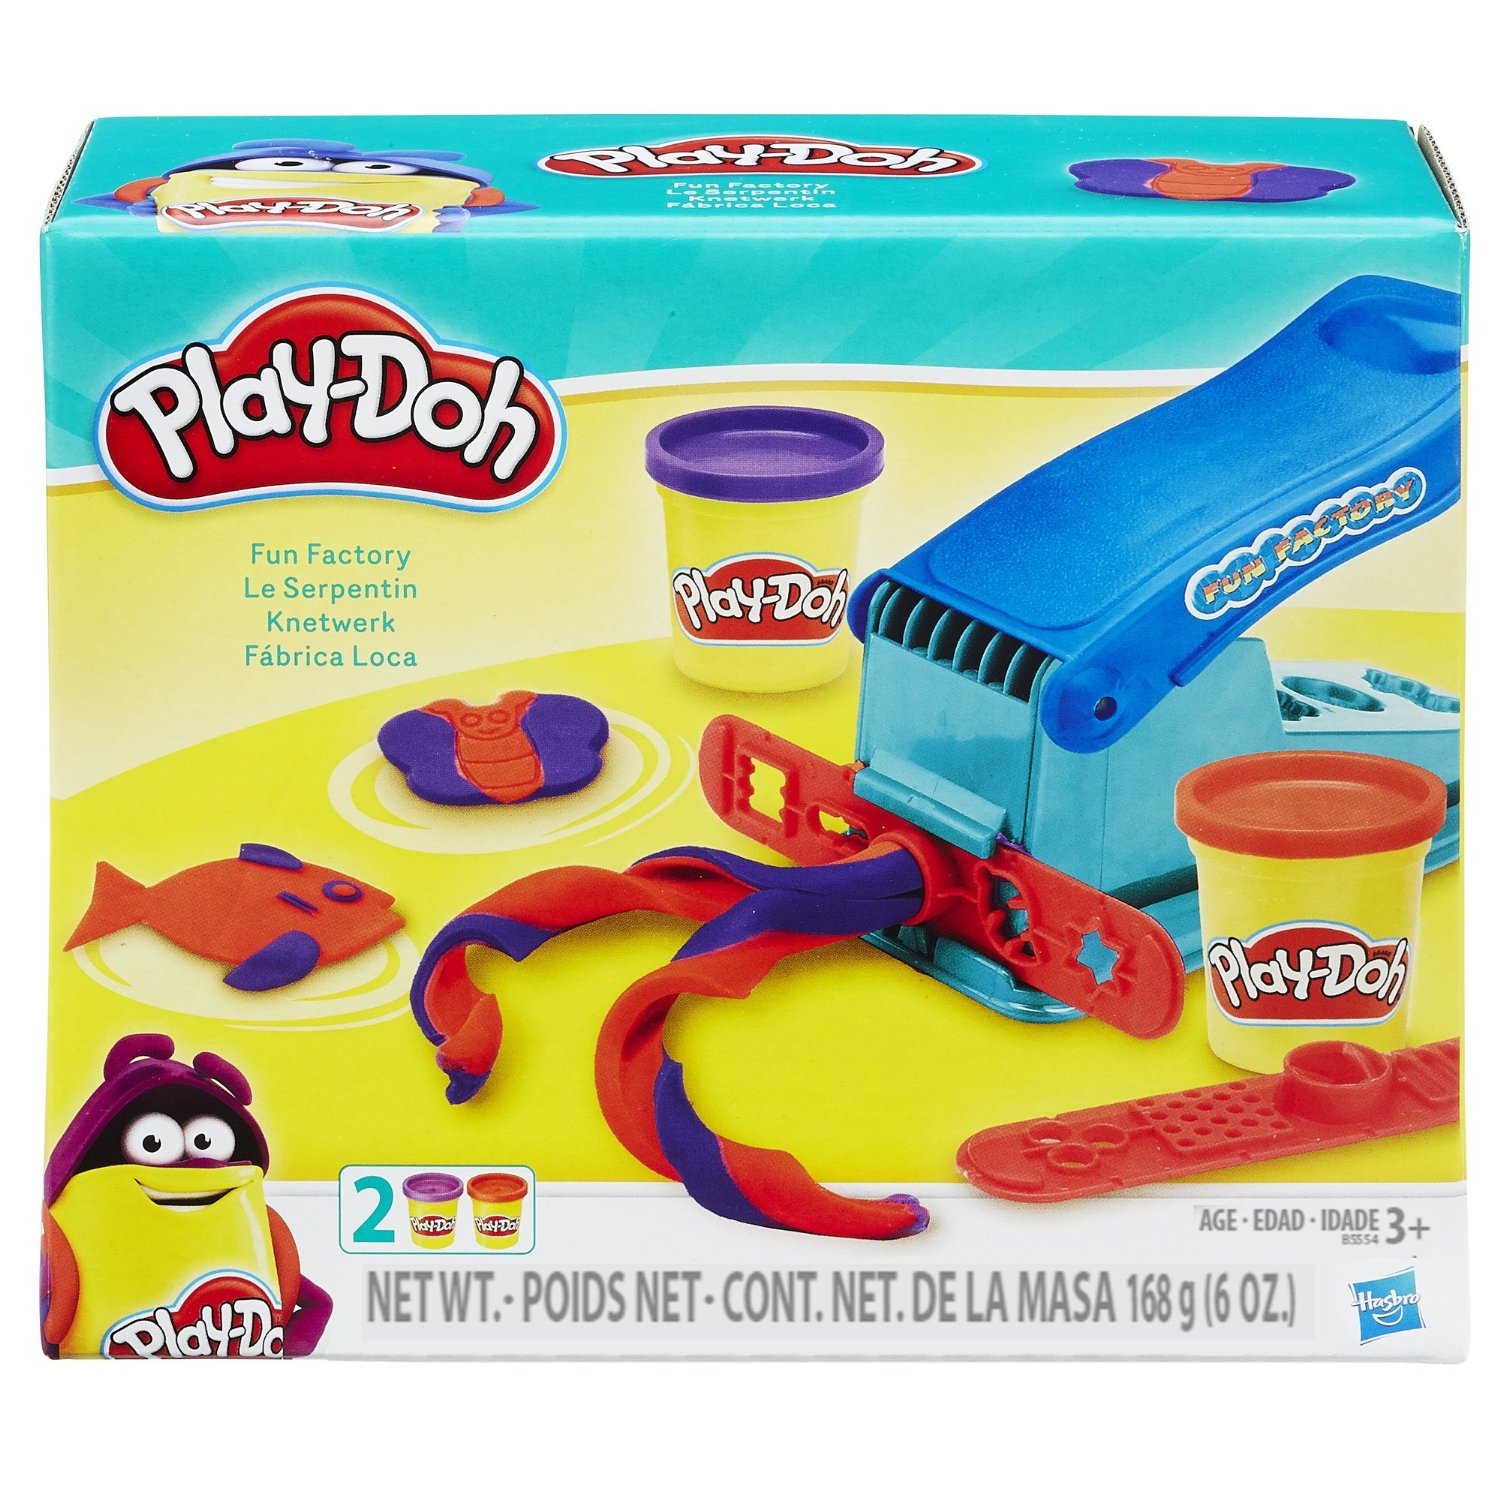 Play-Doh Fun Factory Set – Just $5.99!